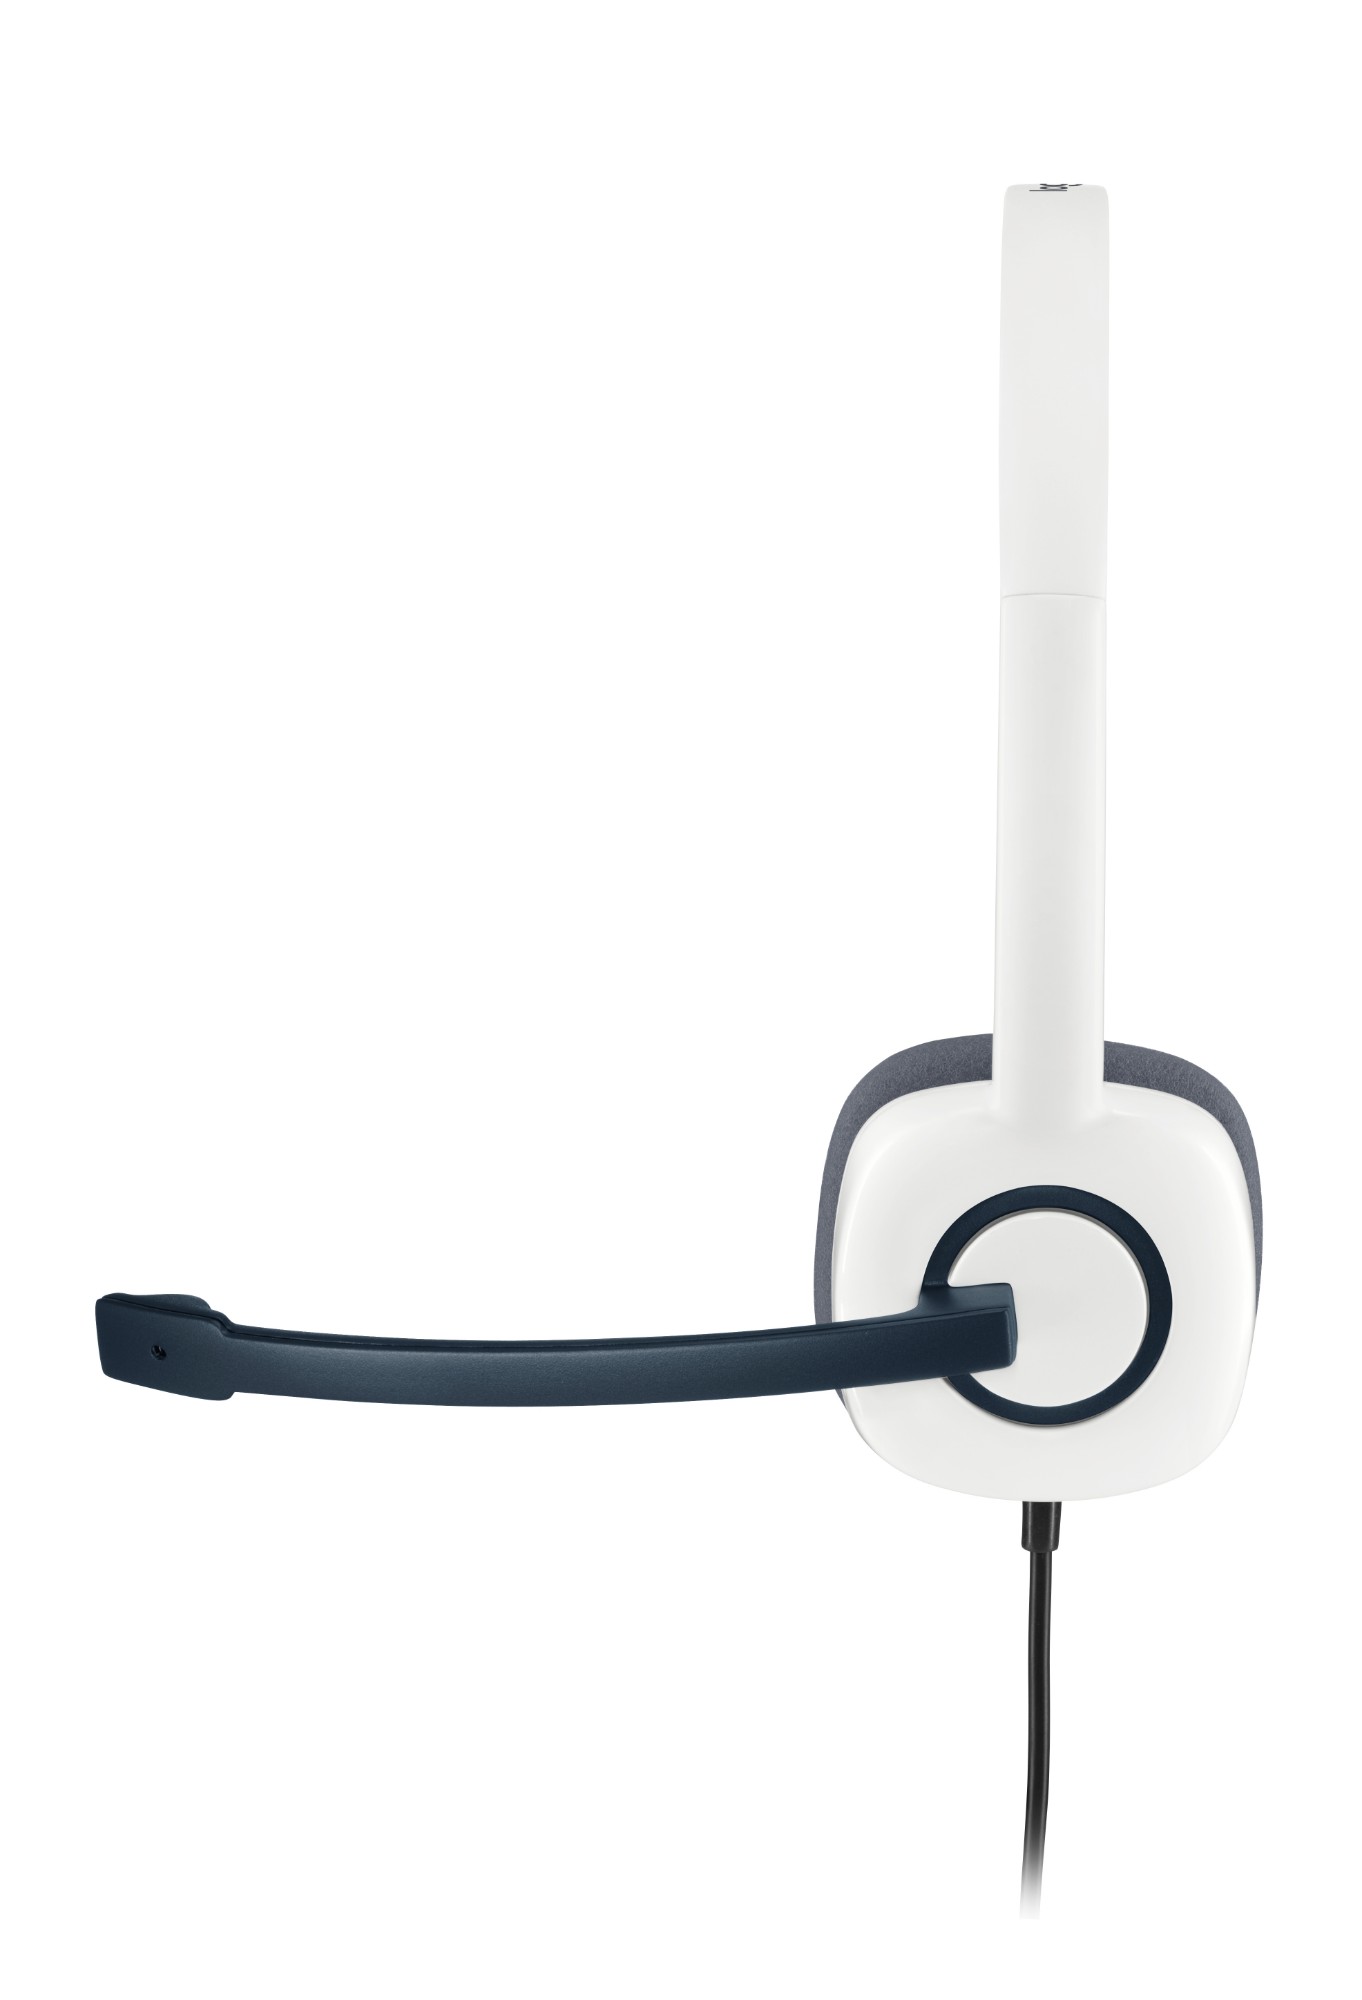 Logitech H150 Headset Head-band White